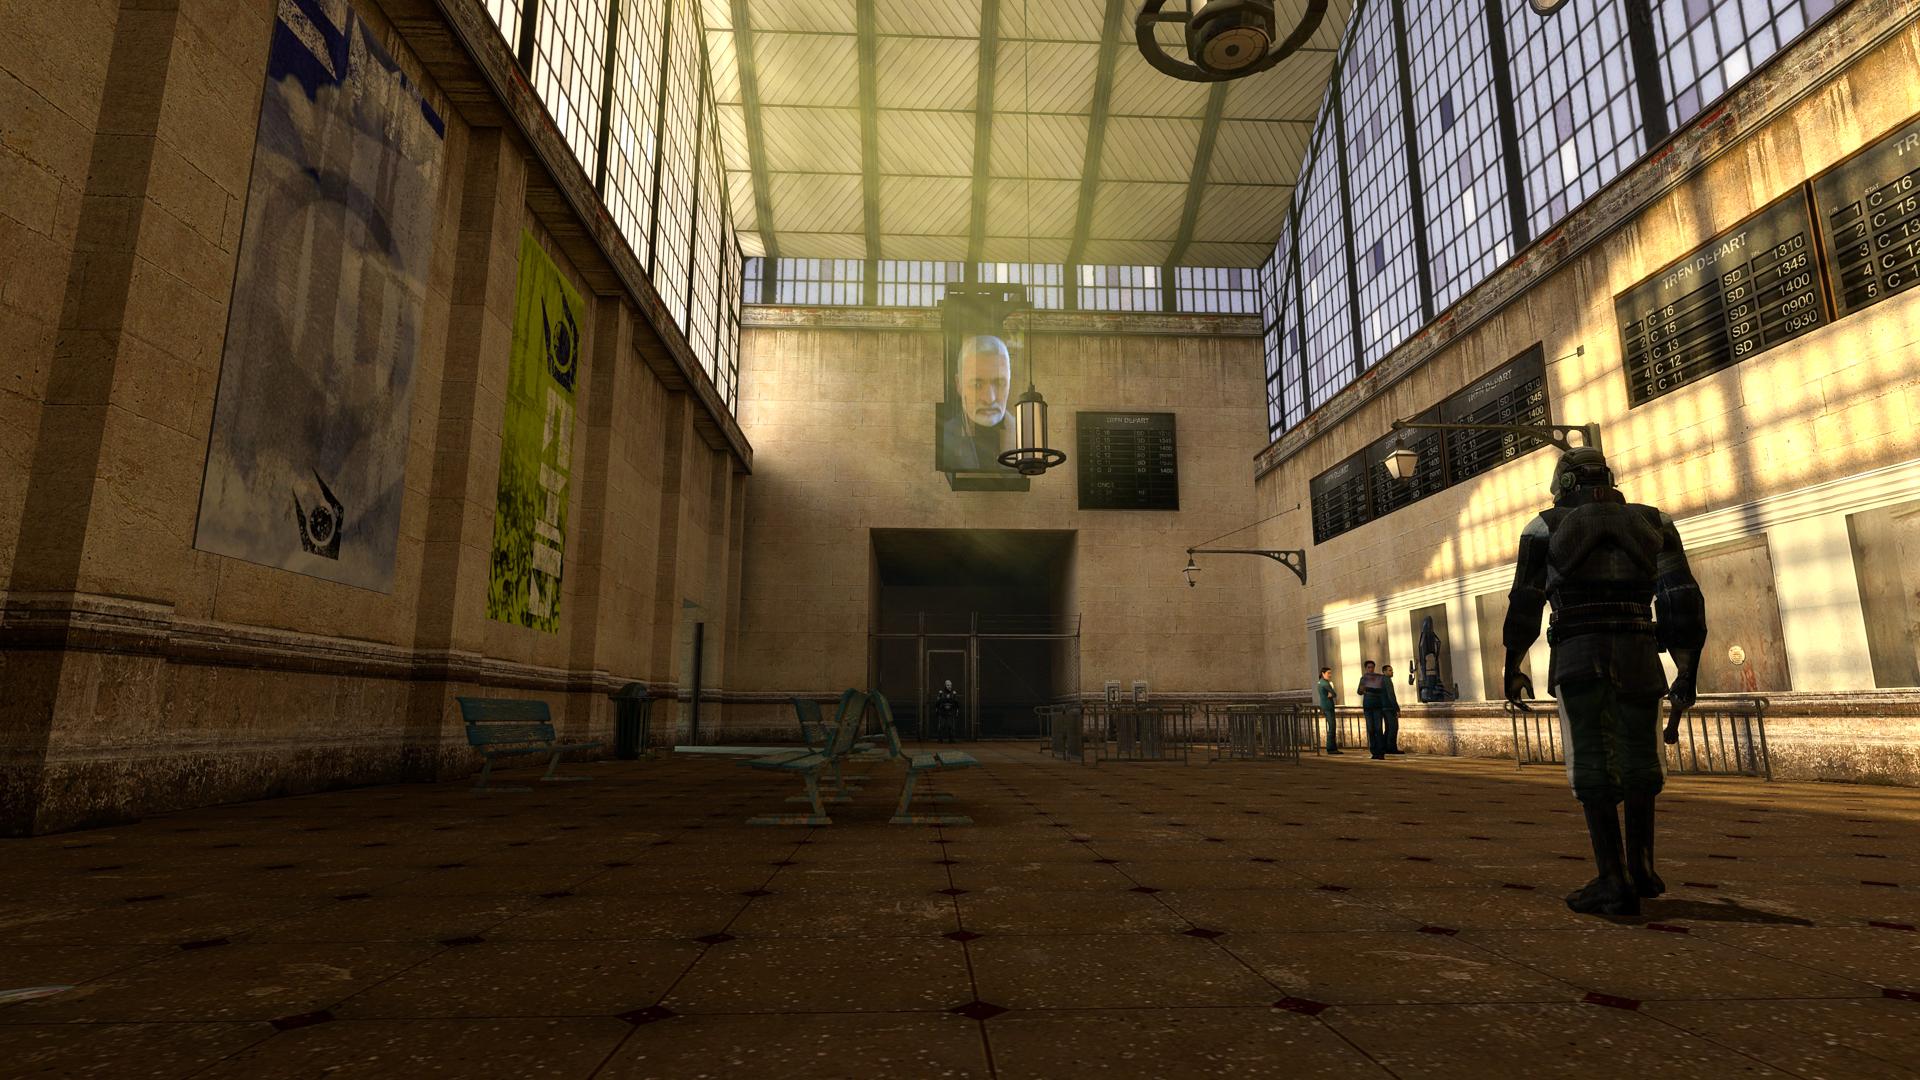 Screenshot №4 from game Half-Life 2: Update